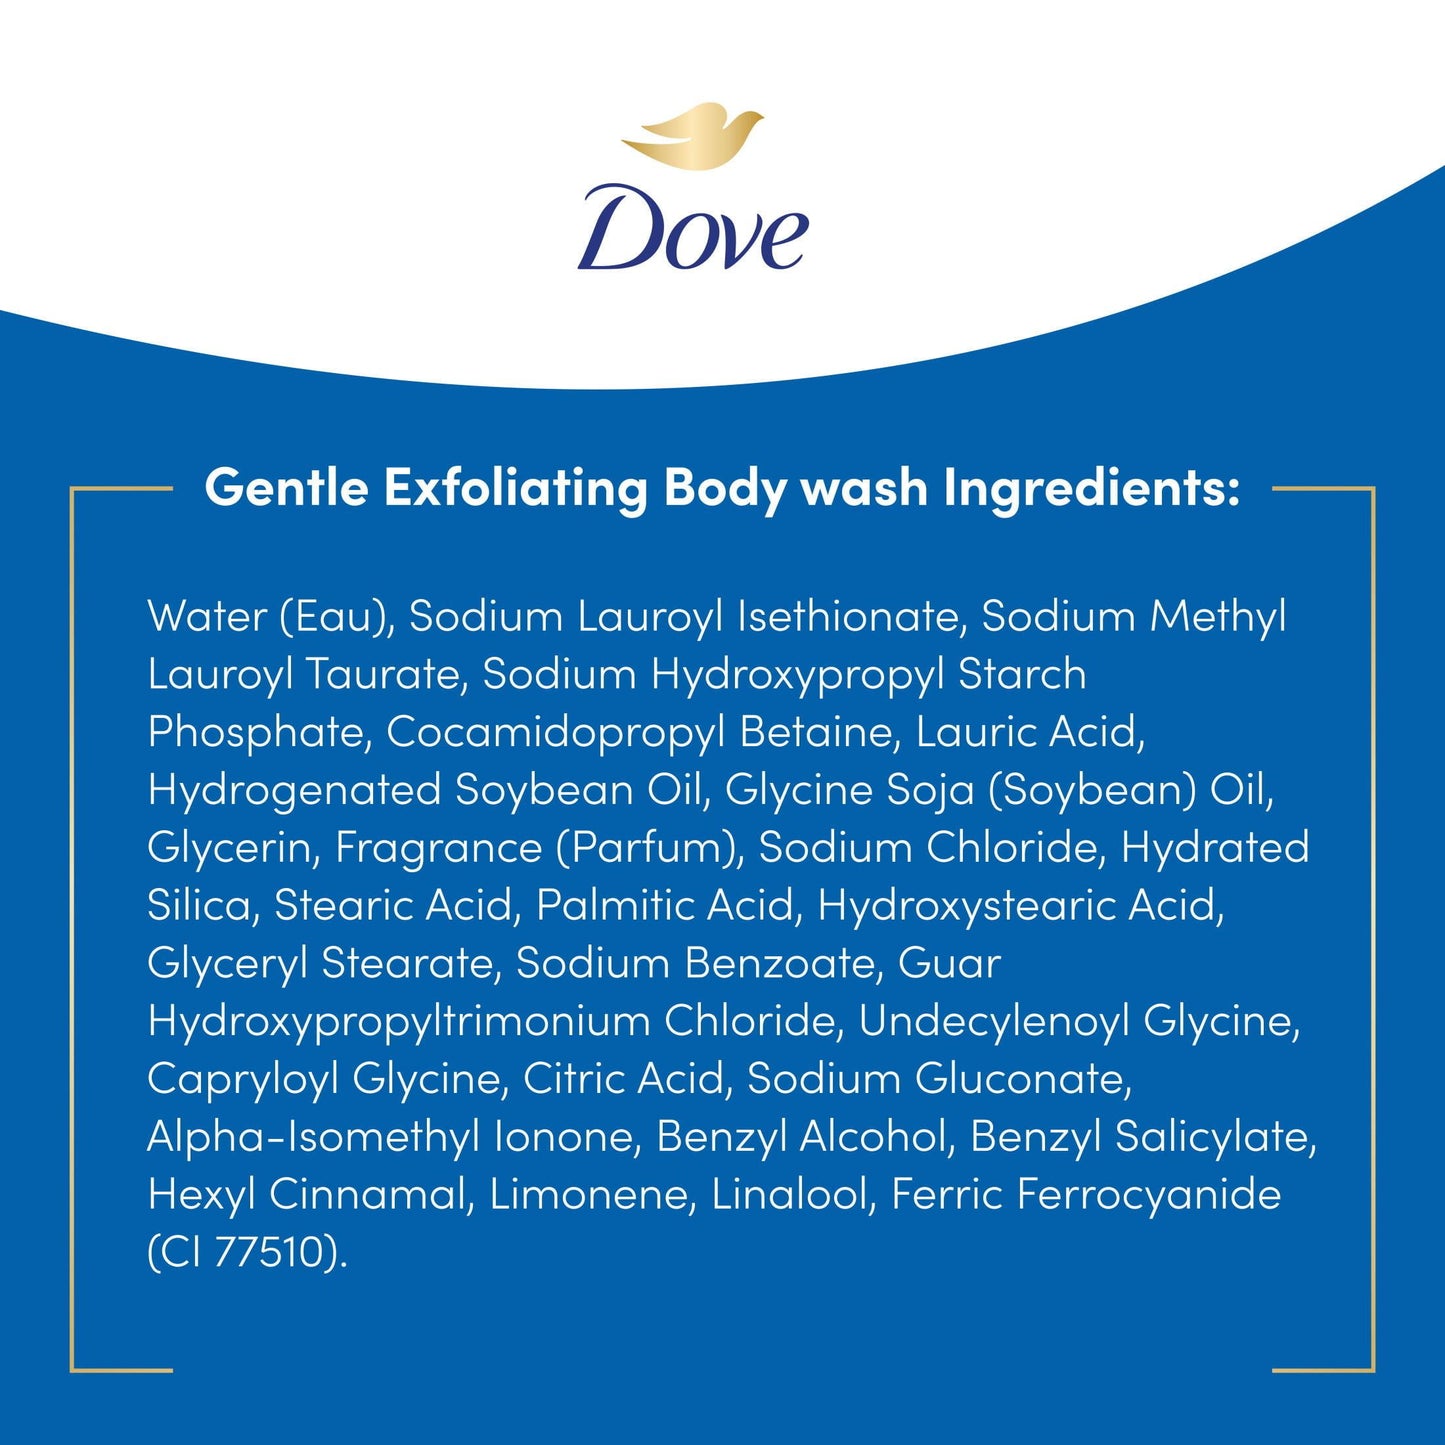 Dove Gentle Exfoliating Long Lasting Body Wash Twin Pack, Sea Minerals, 20 fl oz